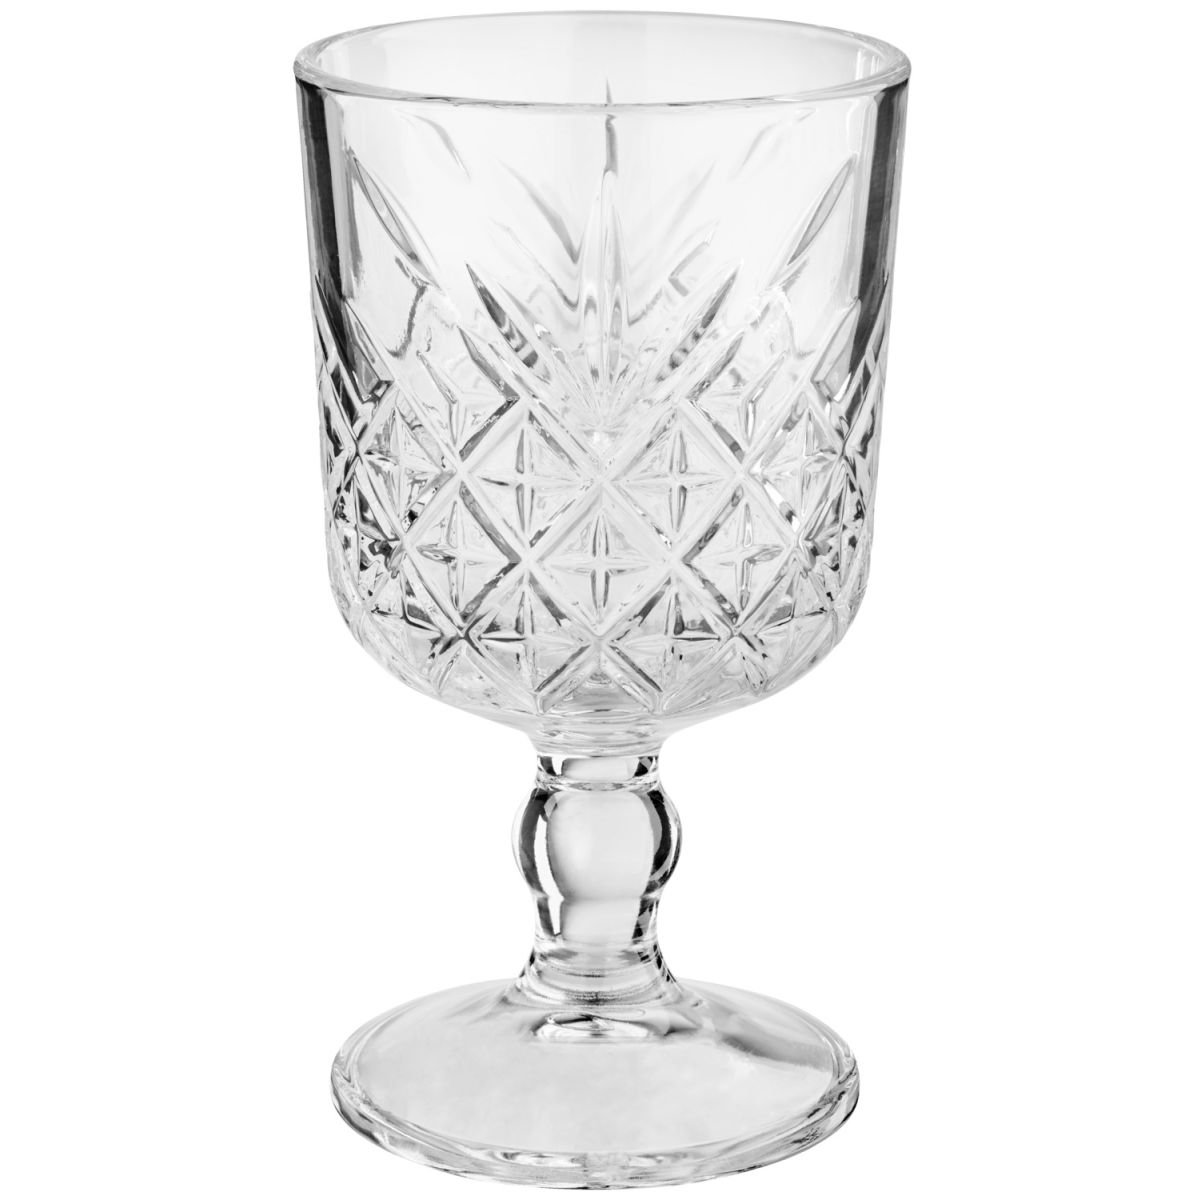 Pasabahçe Cocktailglas Timeless; 320ml, 8.8x15.1 cm (ØxH); transparant; 6 stuk / verpakking